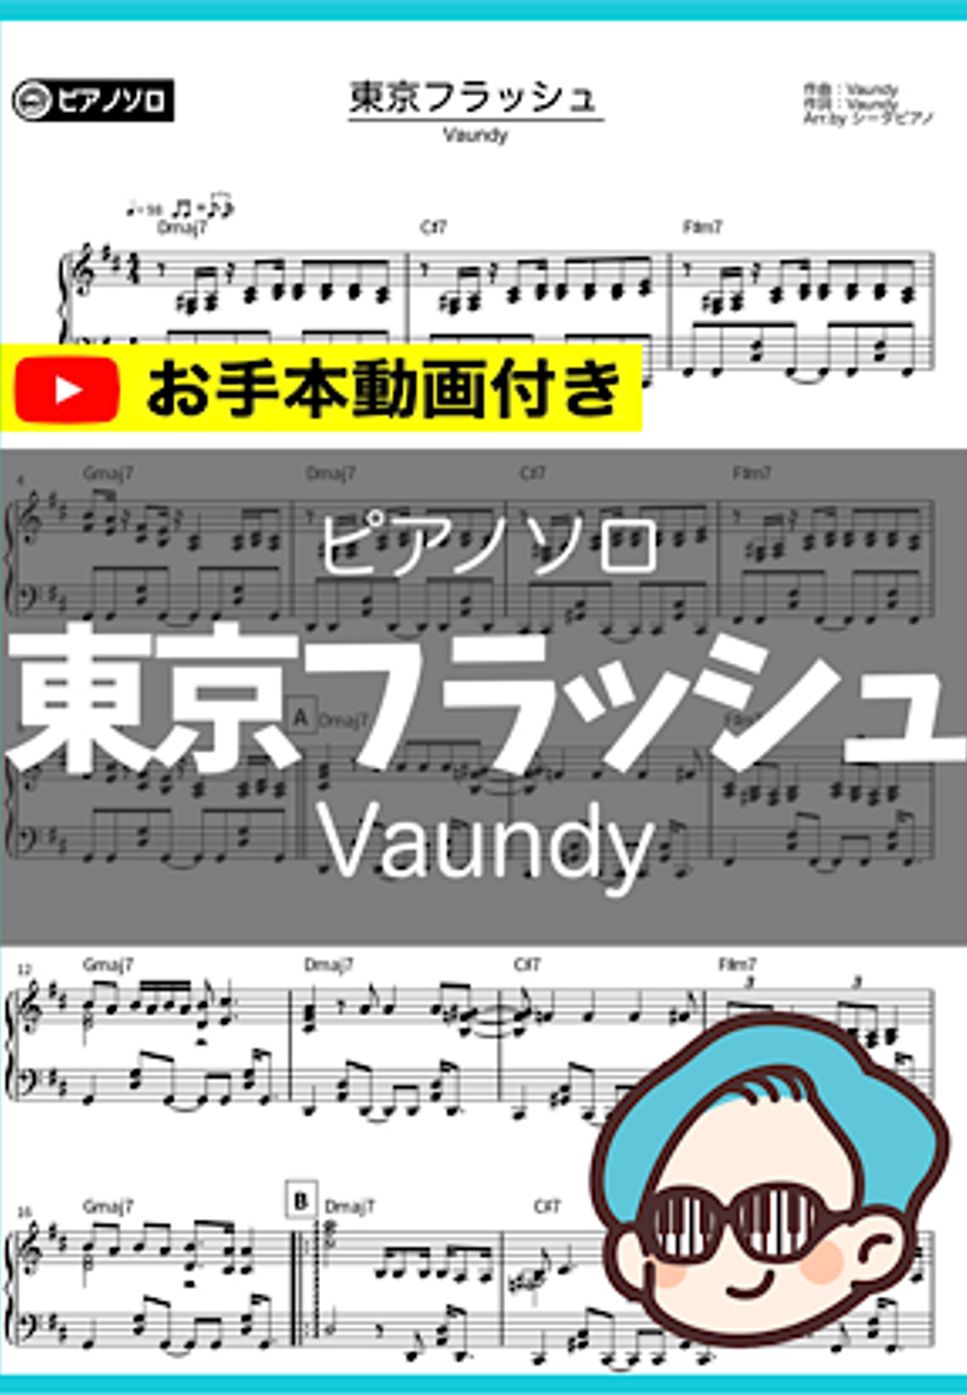 Vaundy - 東京フラッシュ by THETA